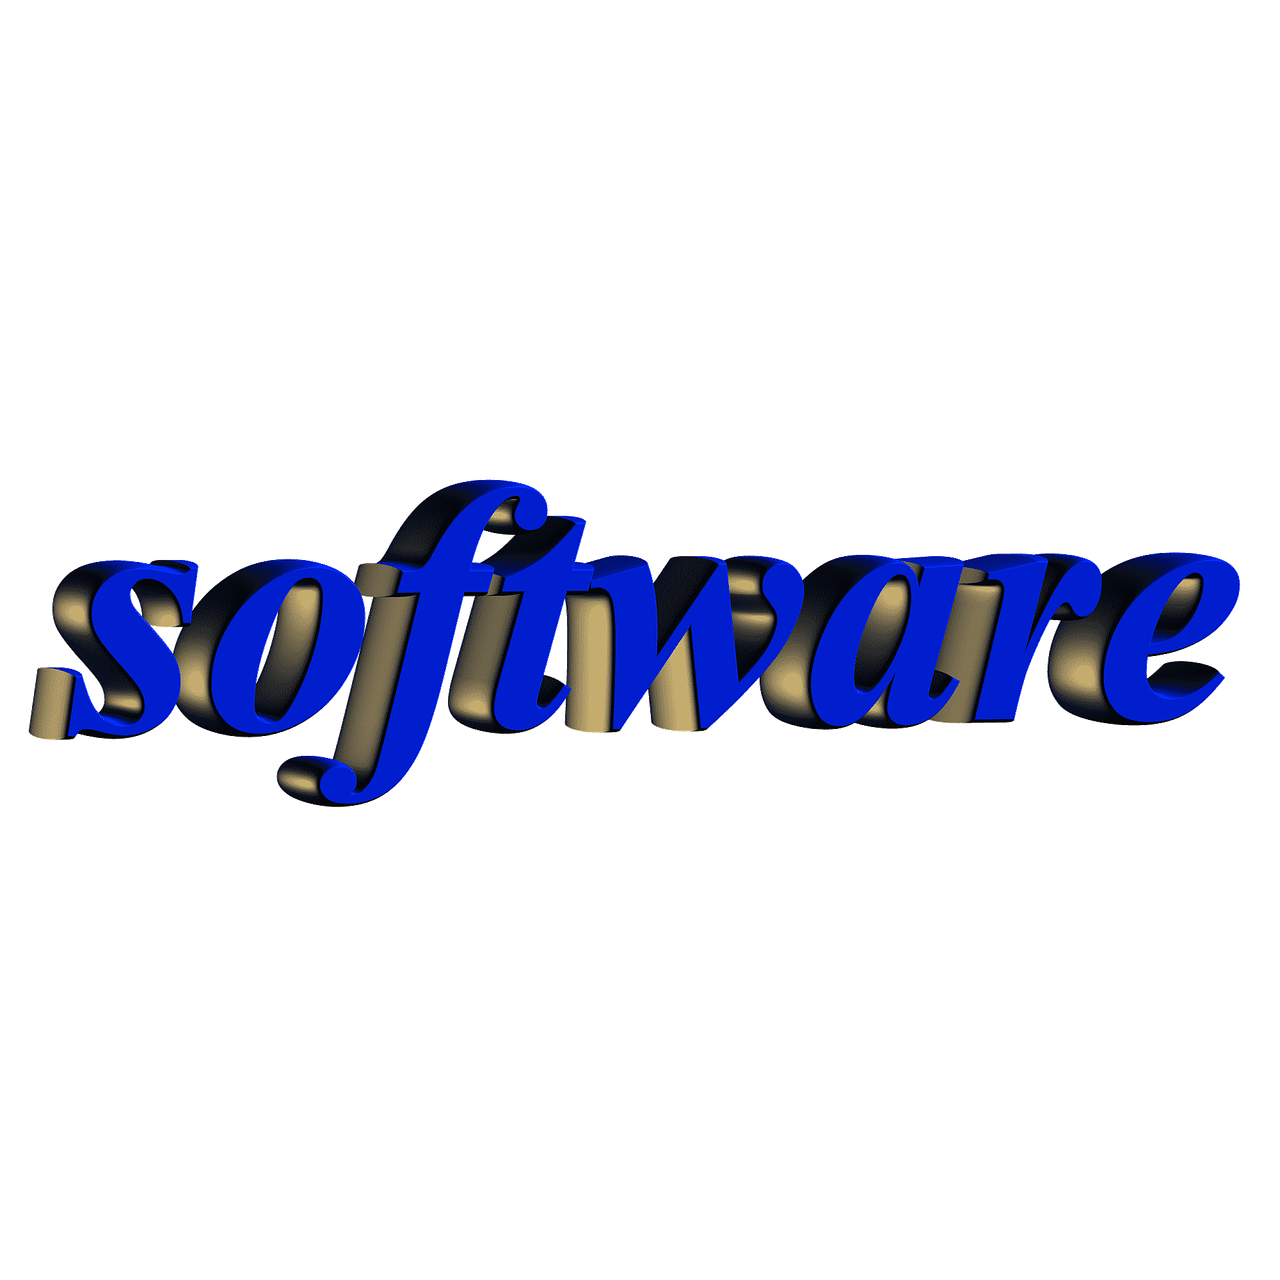 software logo isolated free photo